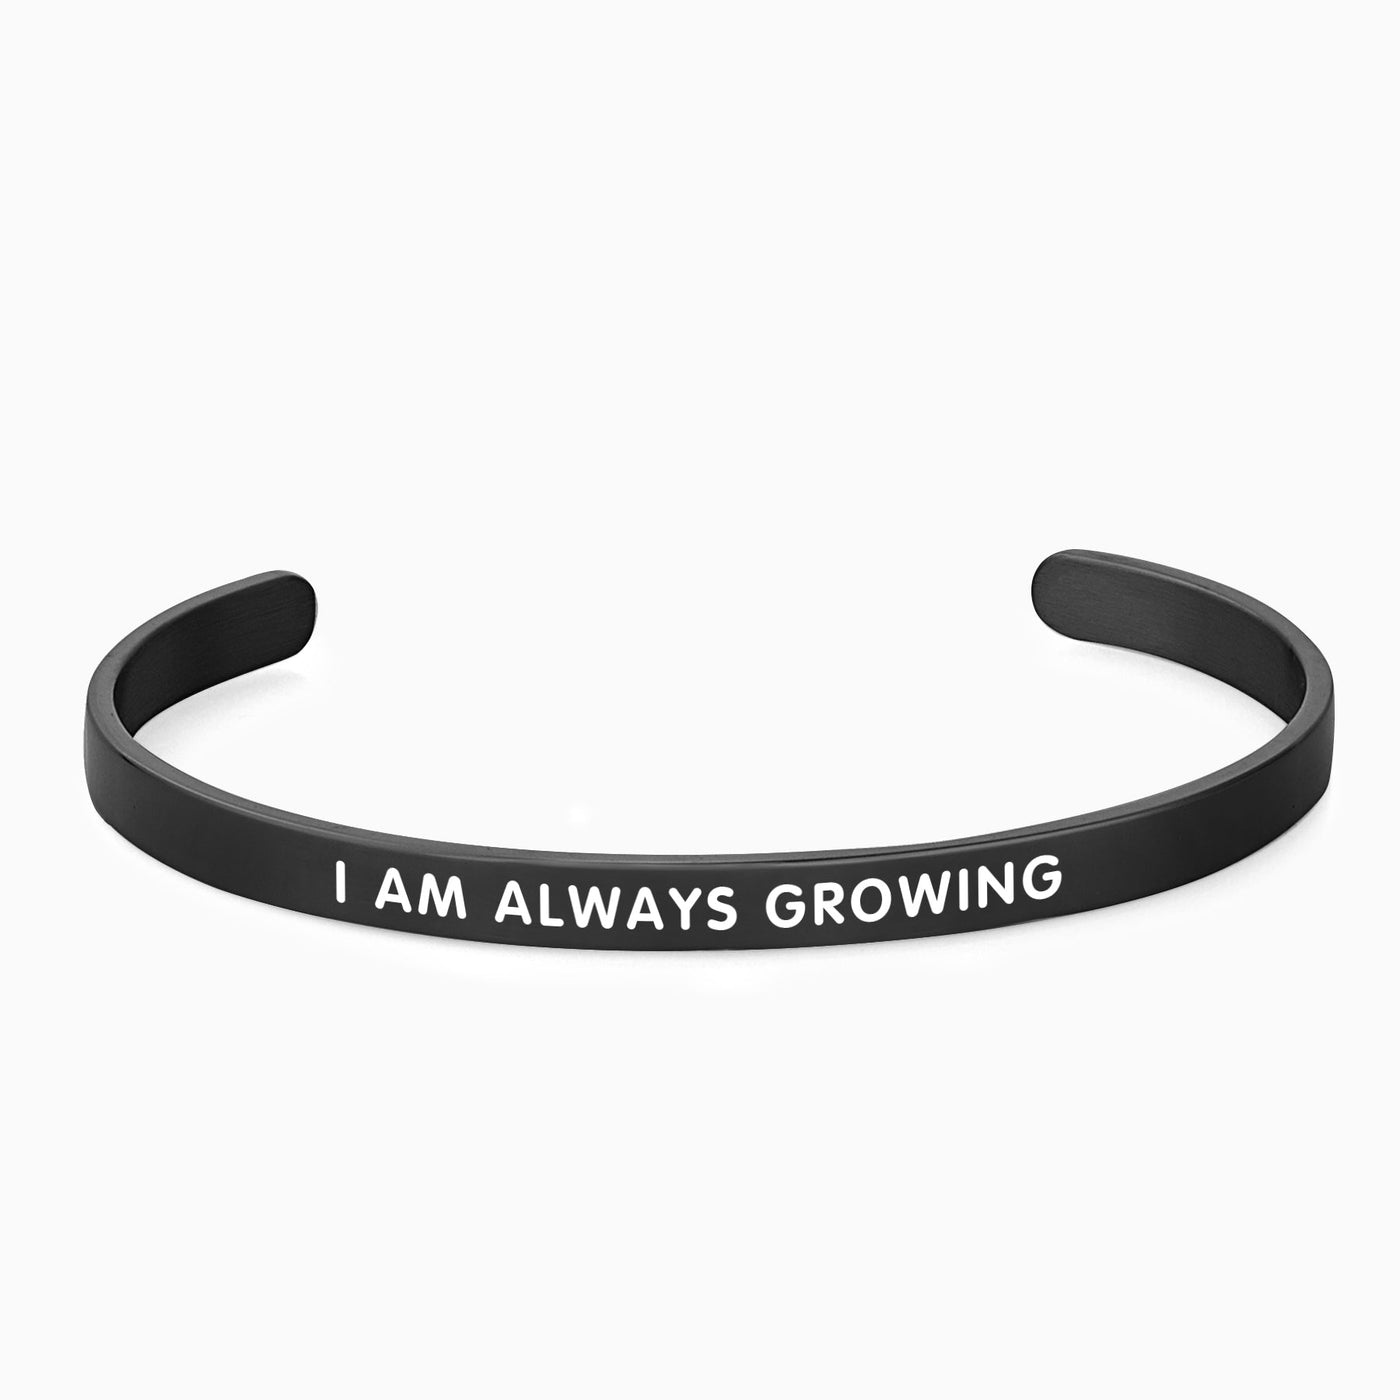 I AM ALWAYS GROWING - OTANTO